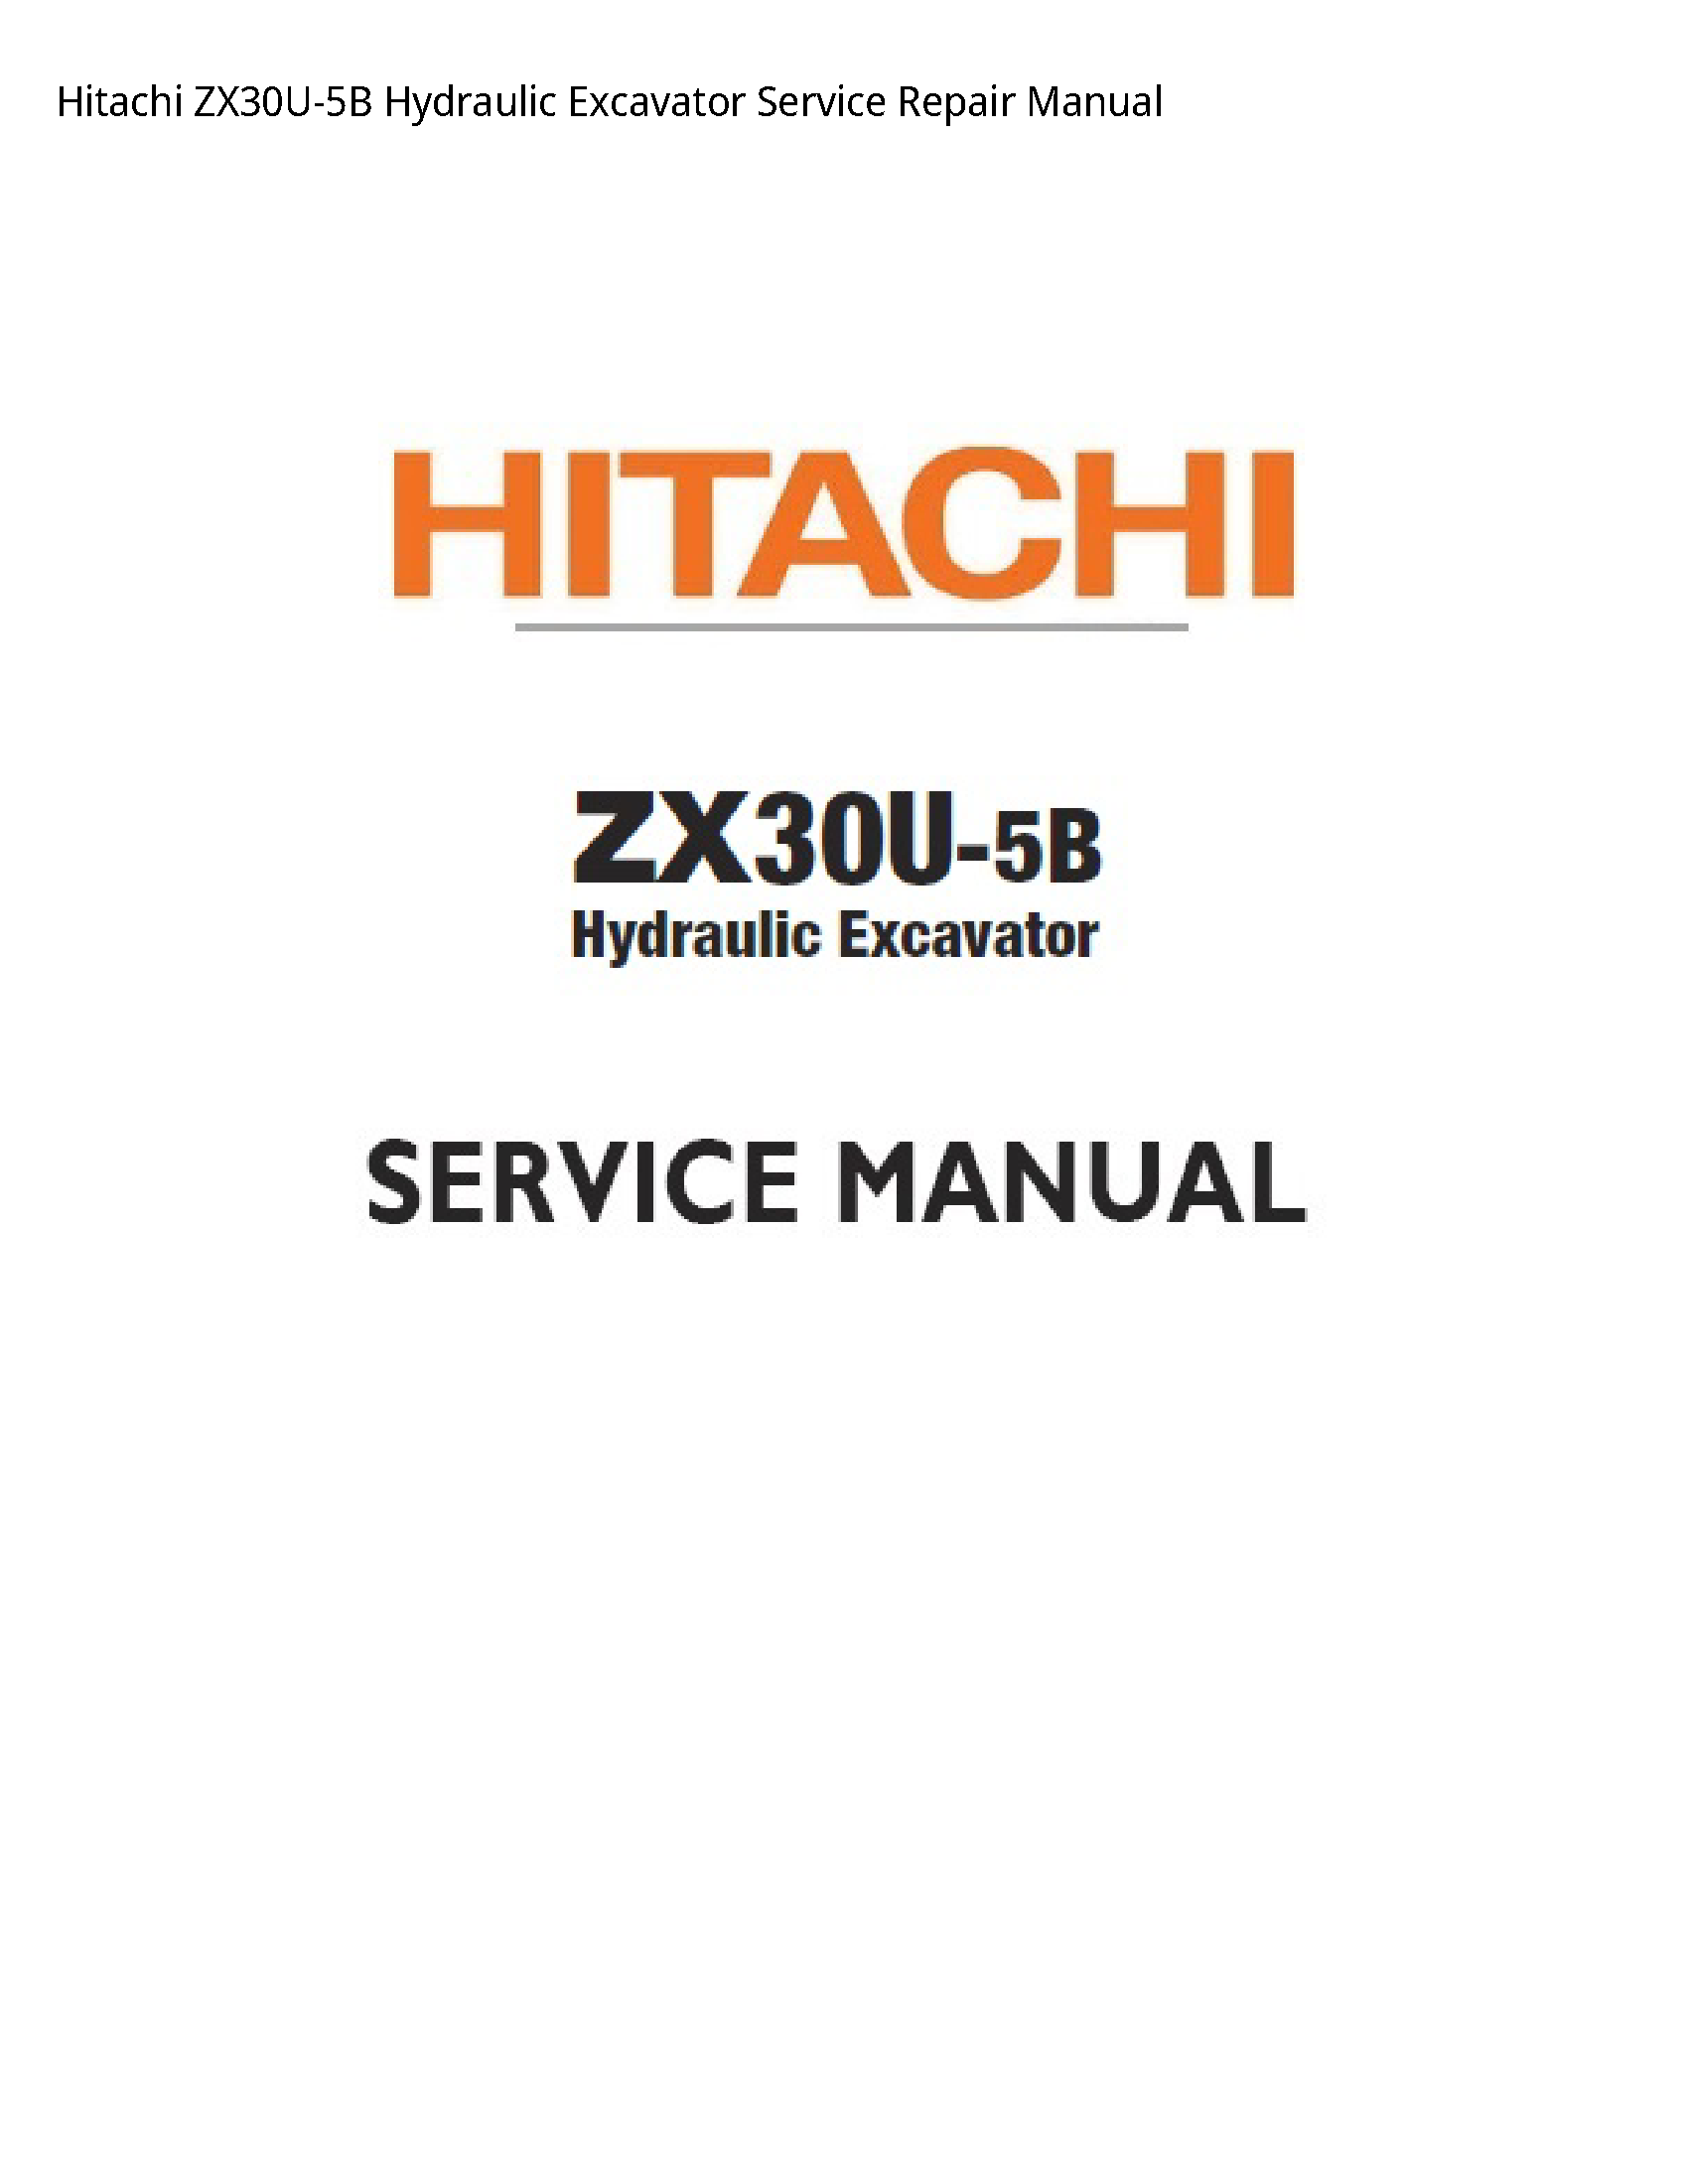 Hitachi ZX30U-5B Hydraulic Excavator manual